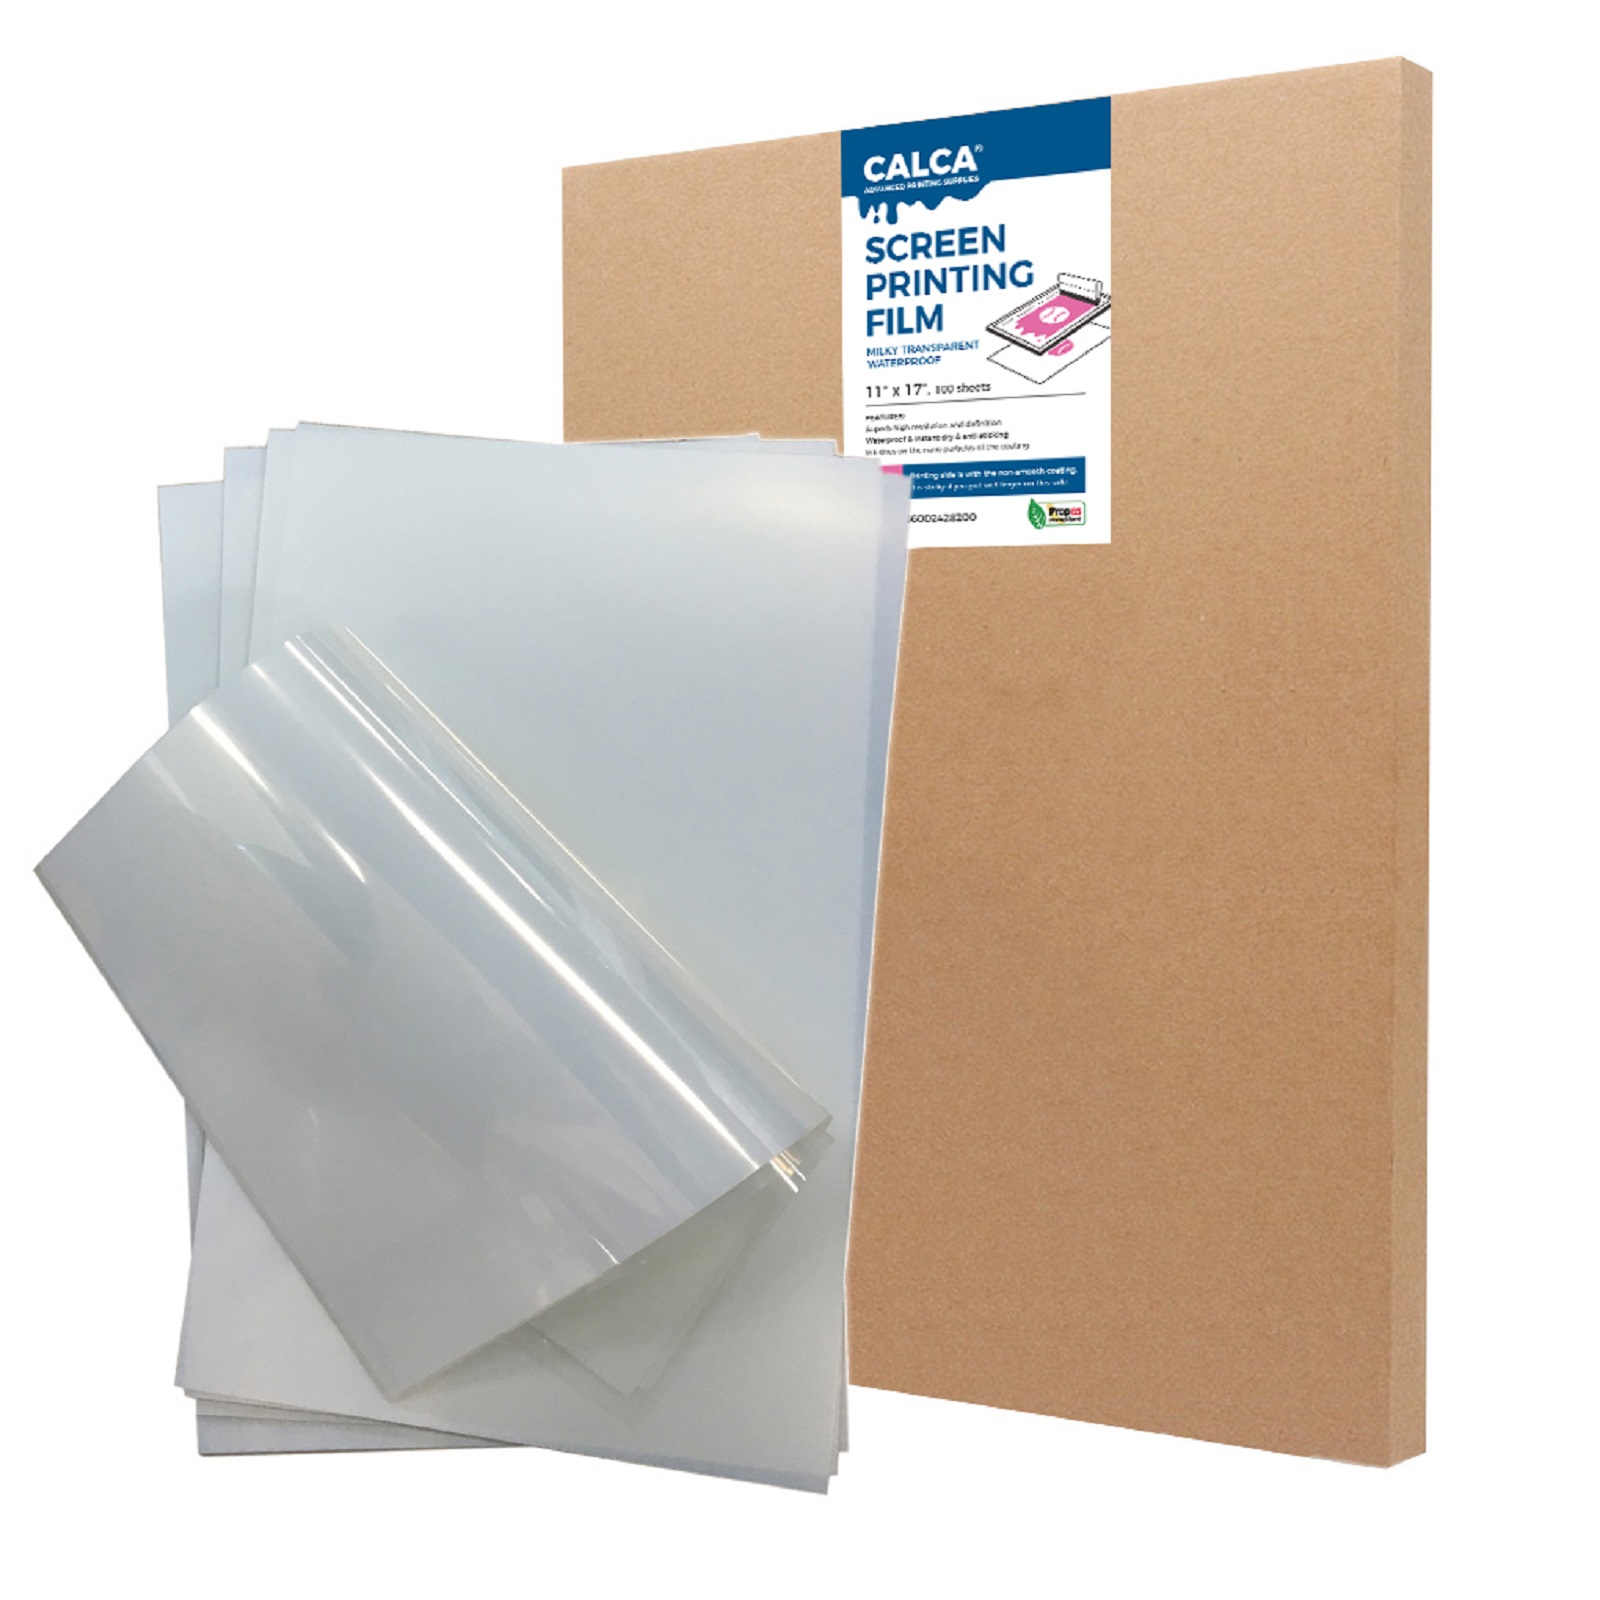 CALCA 100 Sheets/pack Premium Waterproof Inkjet Milky Transparency Film 11" x 17" for Screen Printing